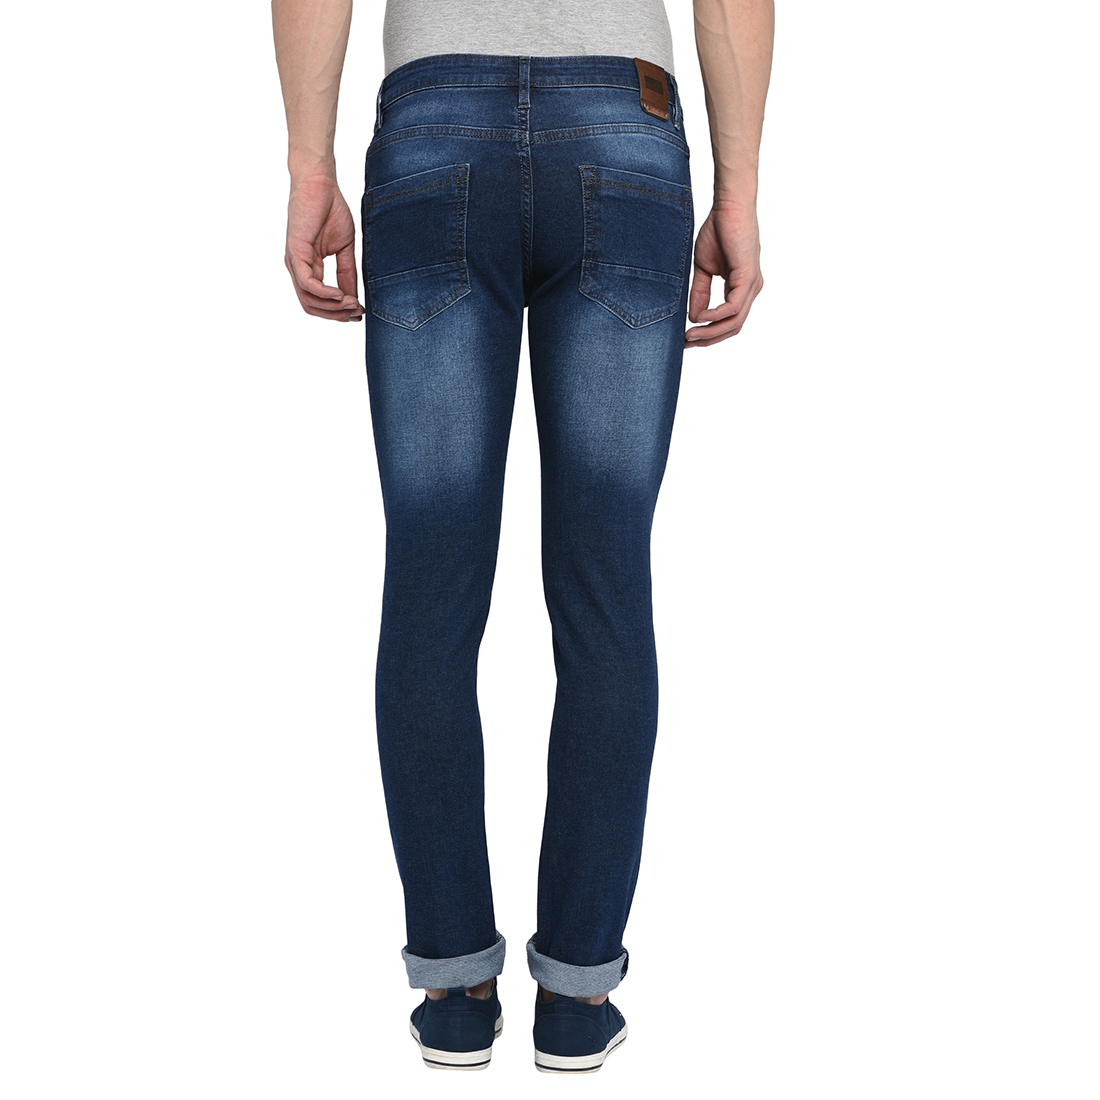 Buy TNG Men's Cotton Solid Casual Blue Slim Fit Jeans Online @ ₹956 ...